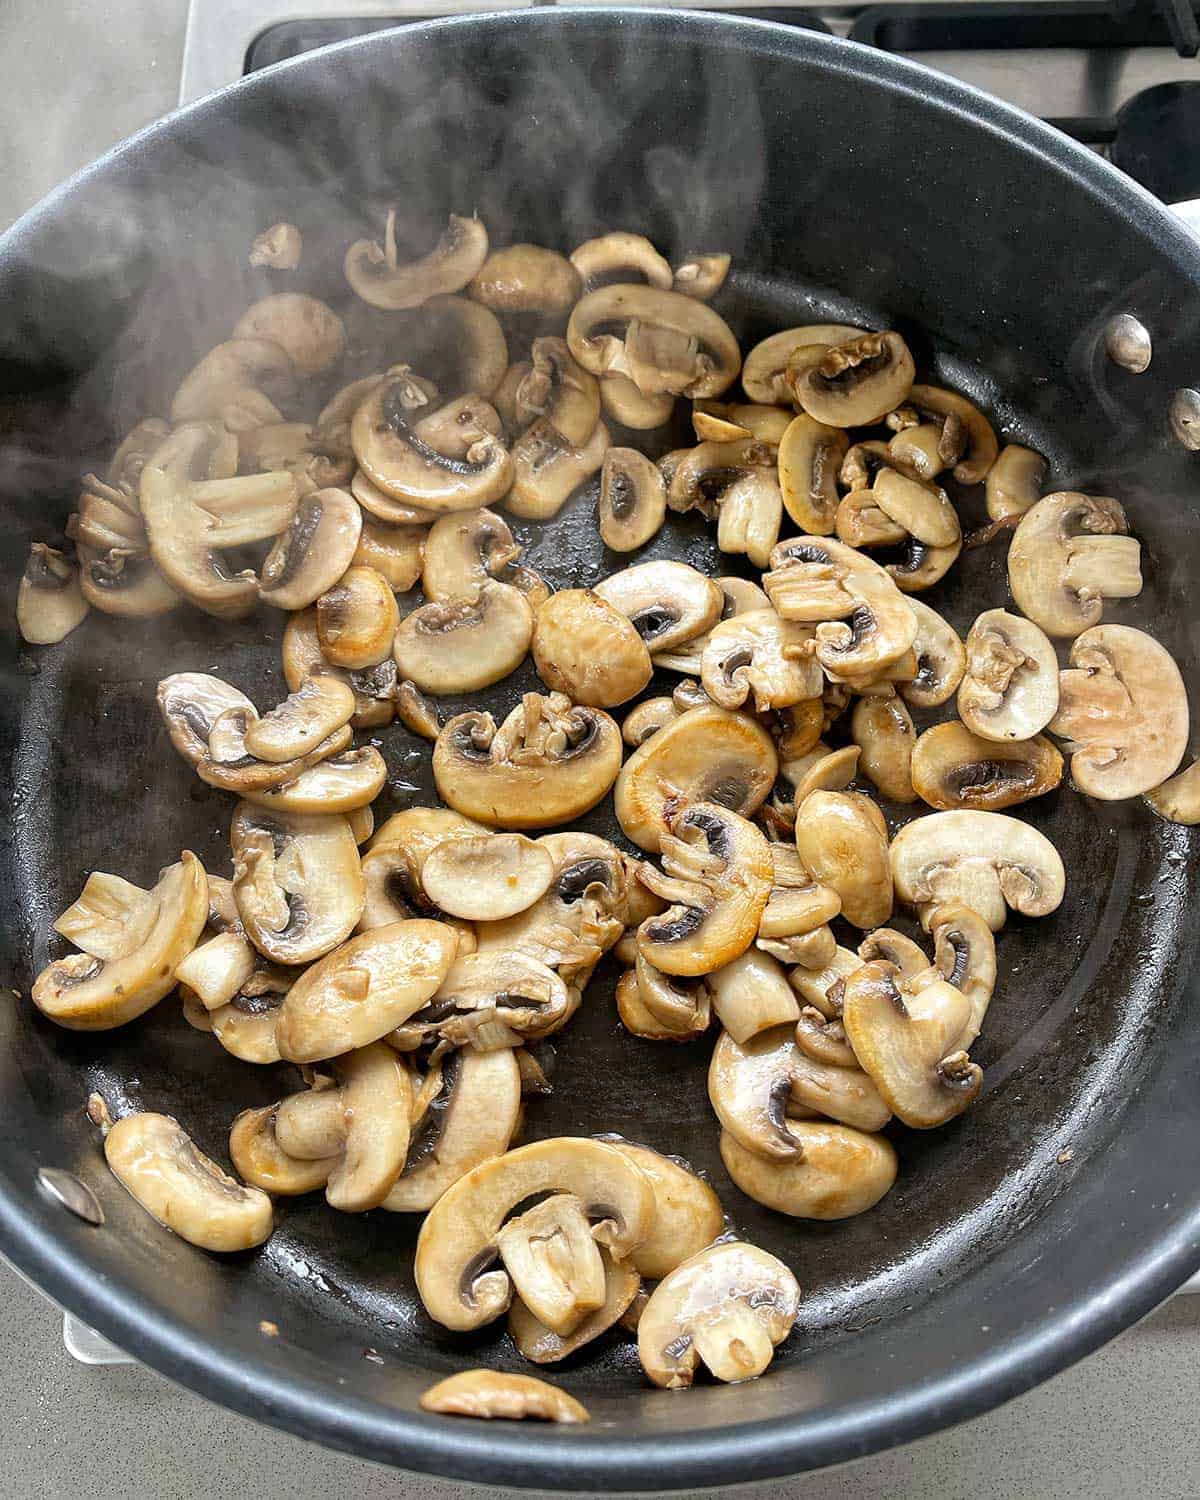 Sliced mushrooms cooking in a frying pan.